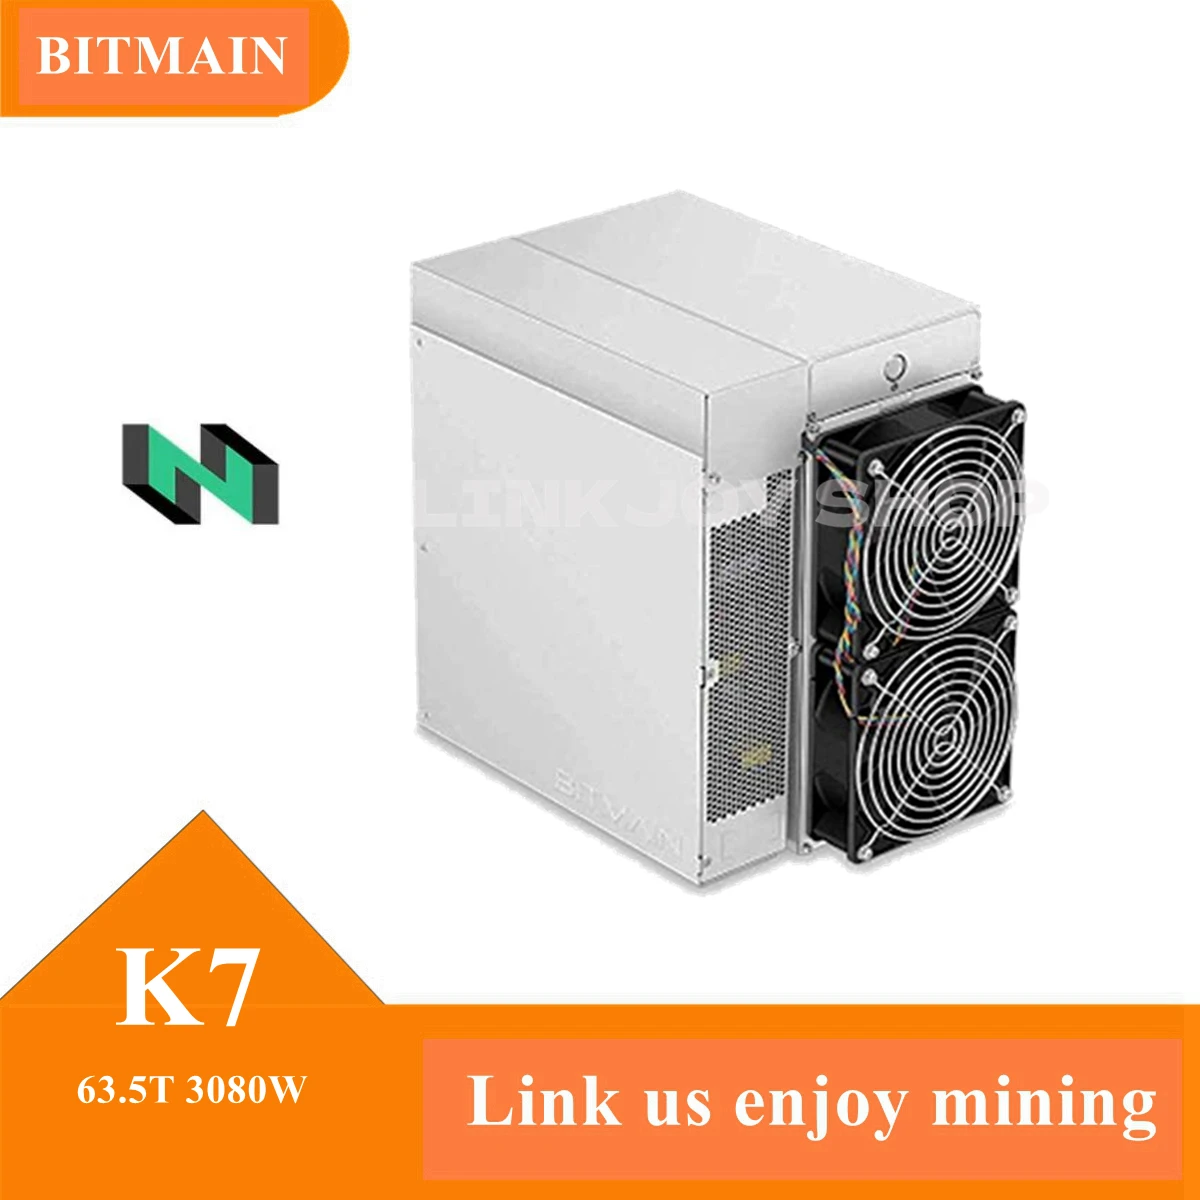 Bitmain K7 CKB Coin Miner 63.5TH/S 58T 3080W Блок Питания Eaglesong Оборудование для Майнинга Криптовалют